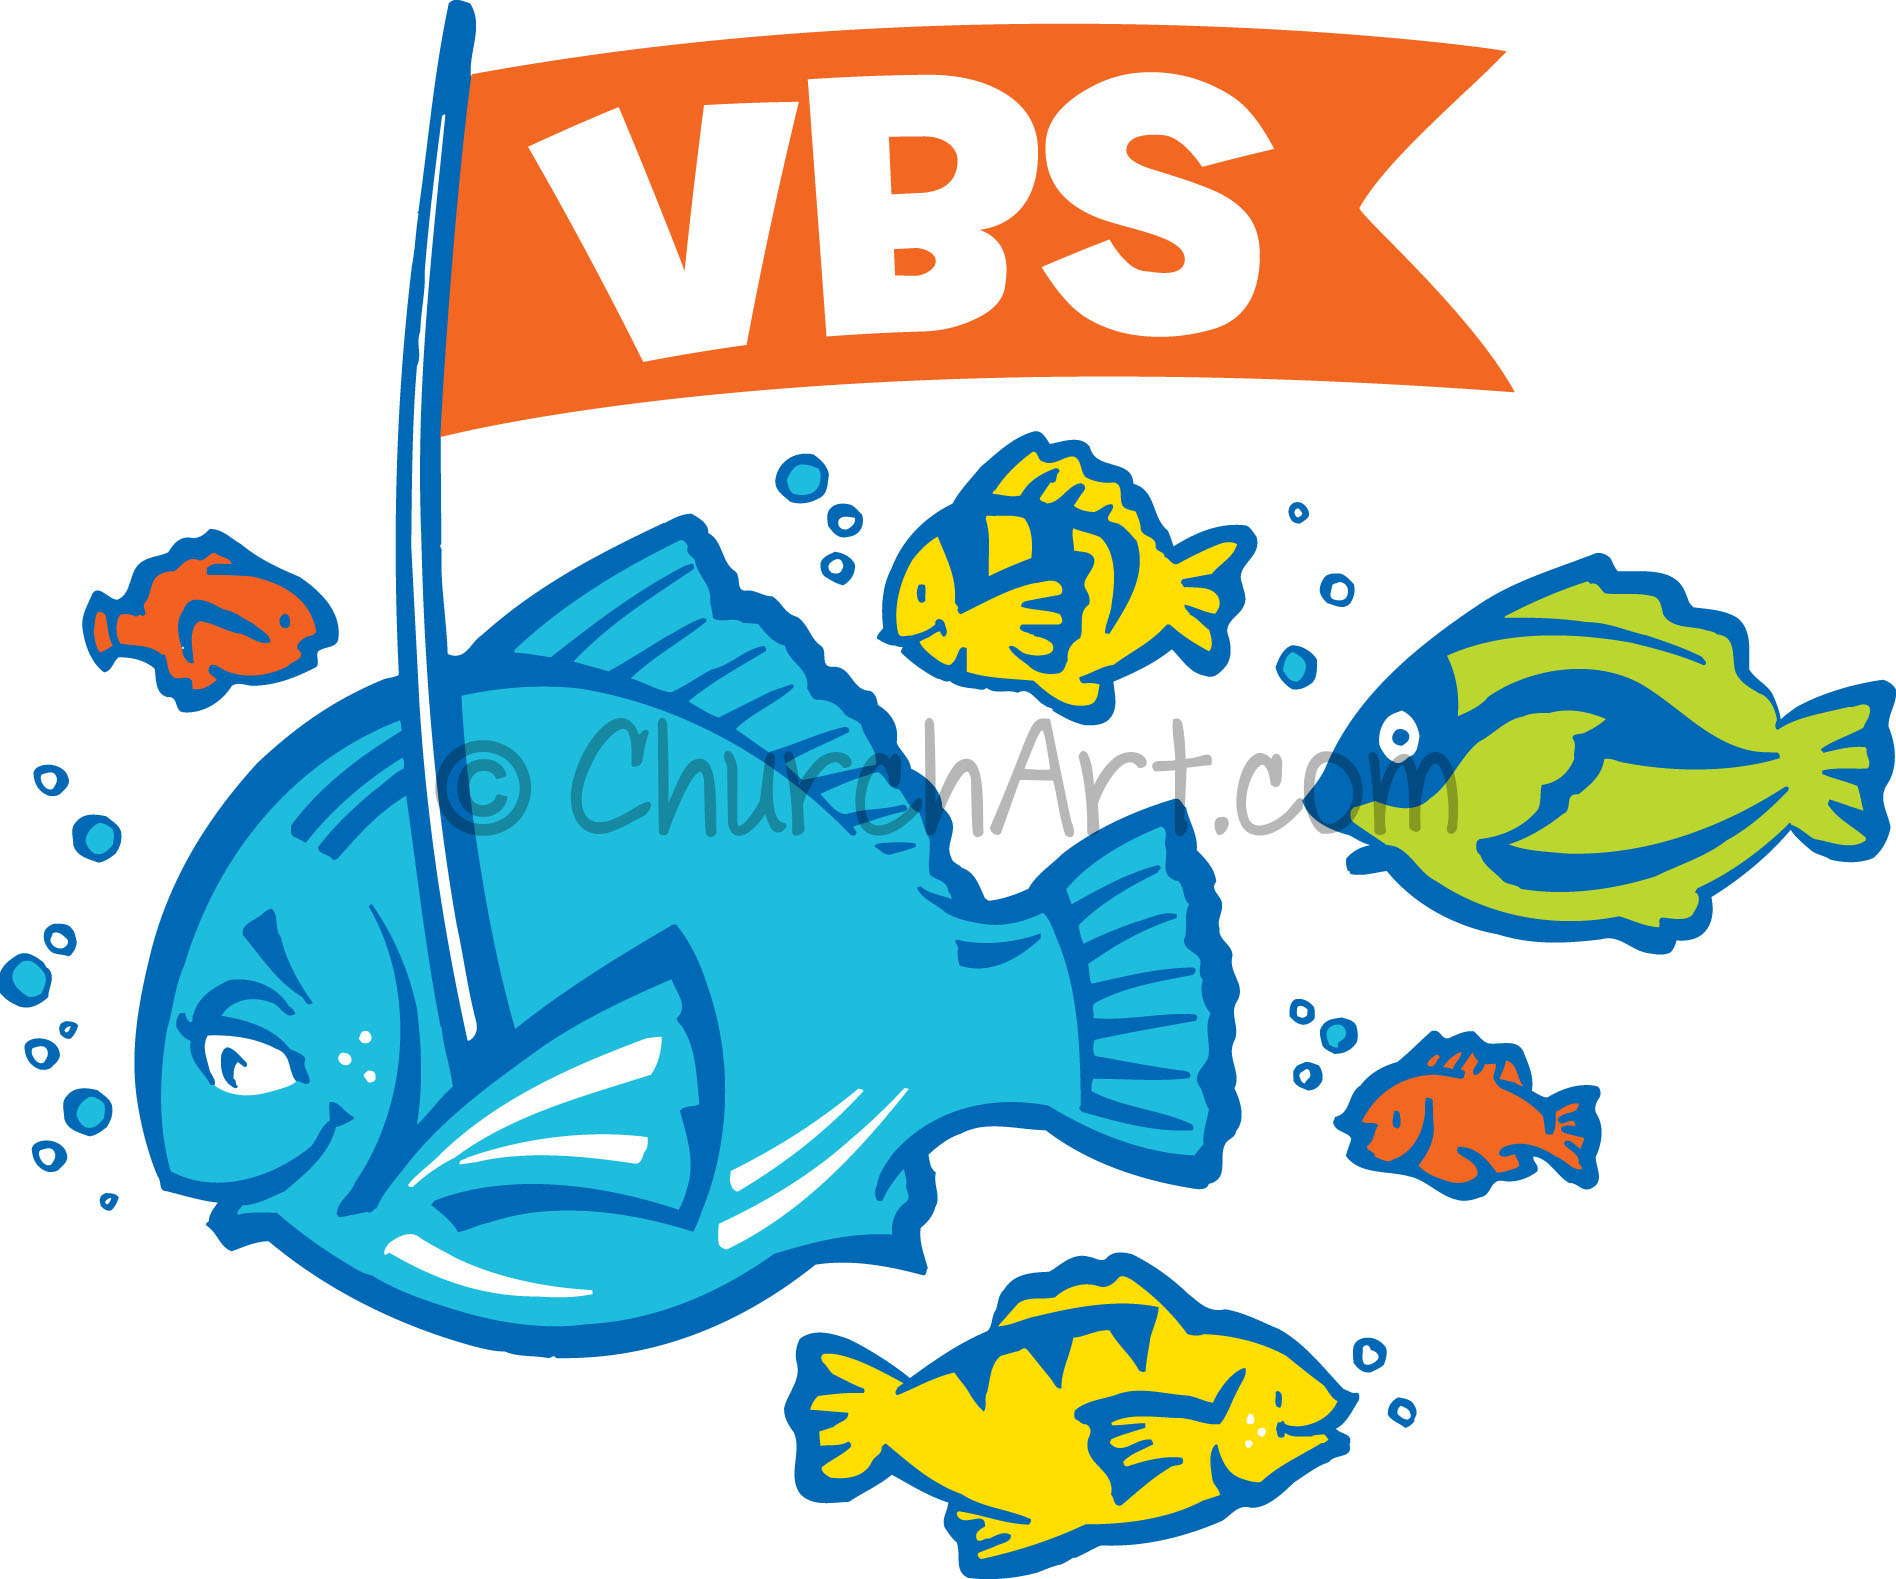 VBS clip-art image